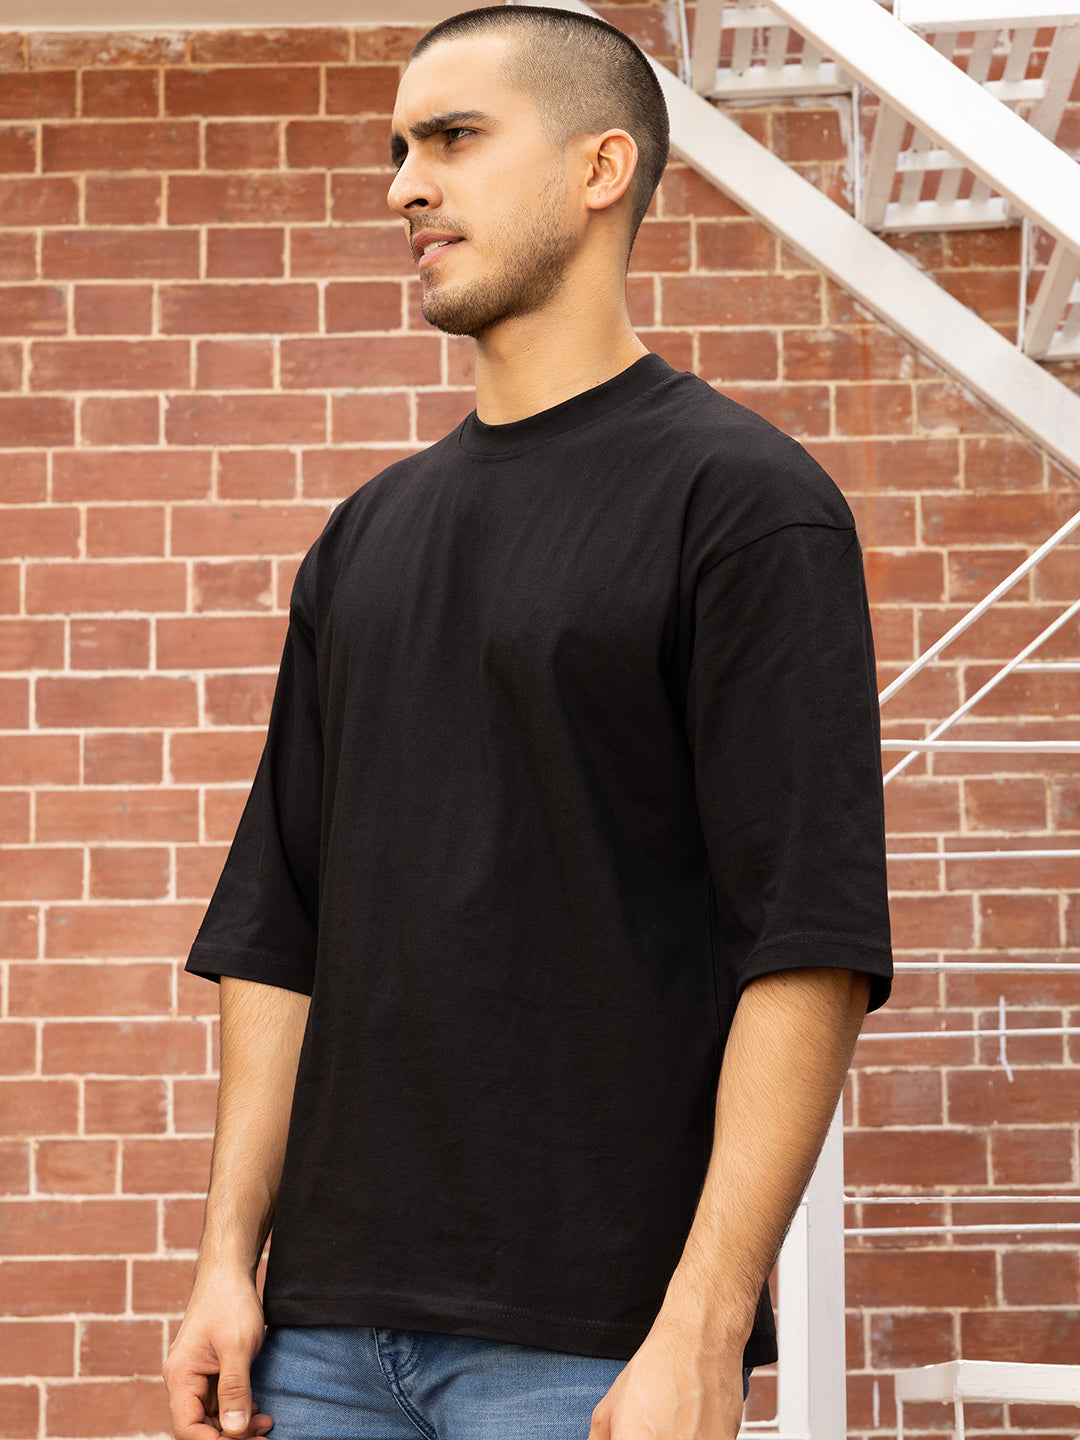 NEWYORK BLACK Oversized Drop shoulder Tee by Stylo Fashion